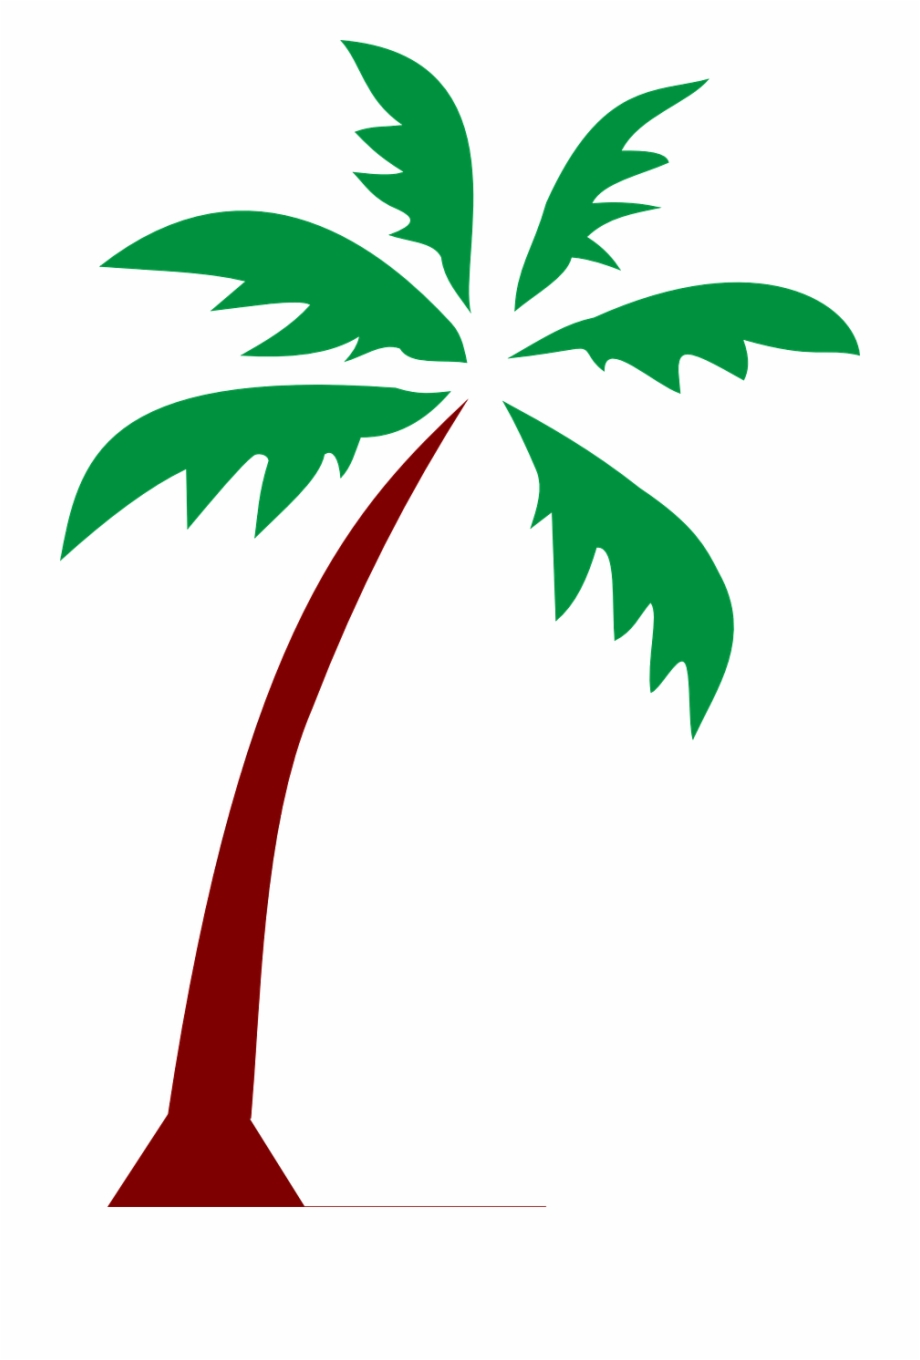 Free Palm Tree Logo Png, Download Free Palm Tree Logo Png png images ...